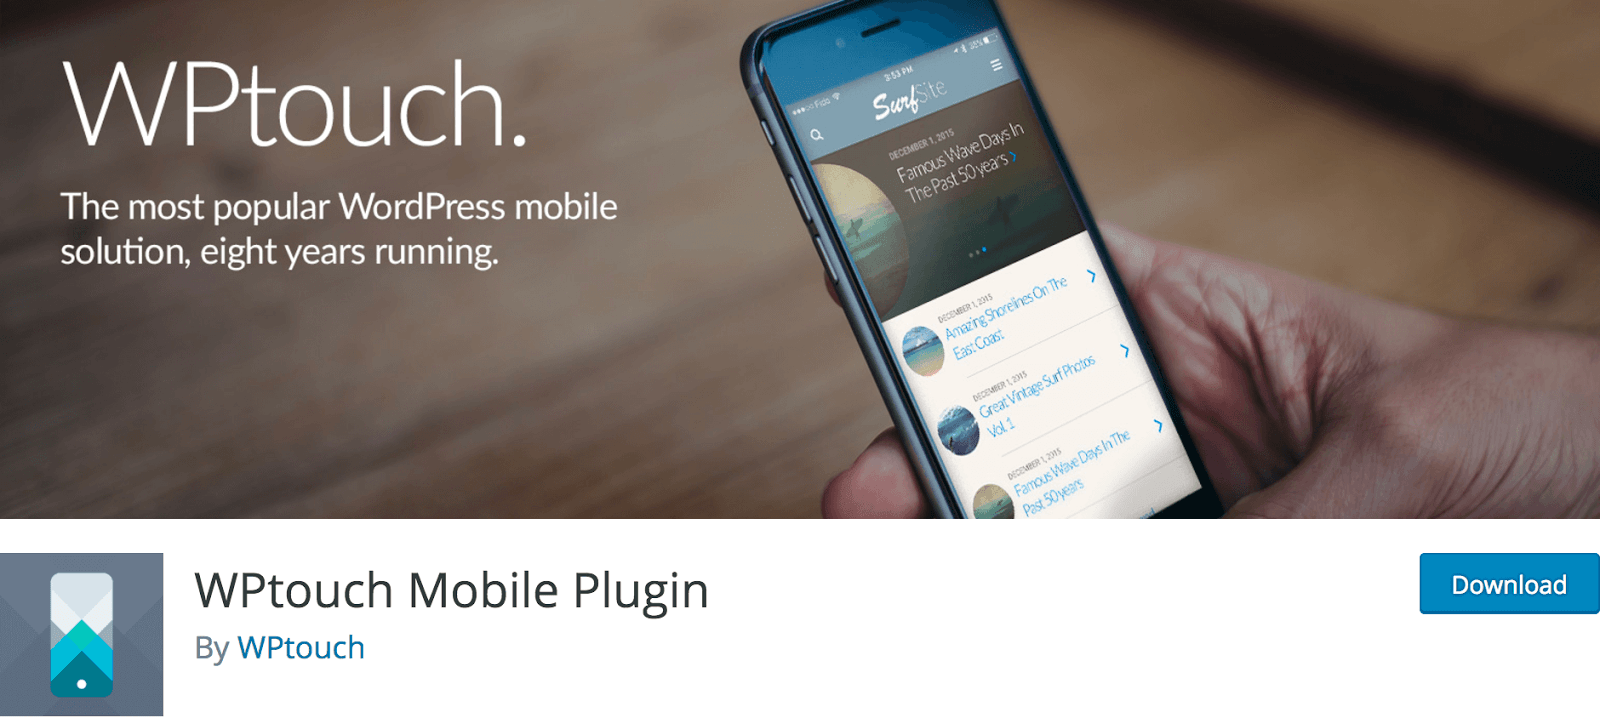 WPtouch WordPress Mobile Plugin